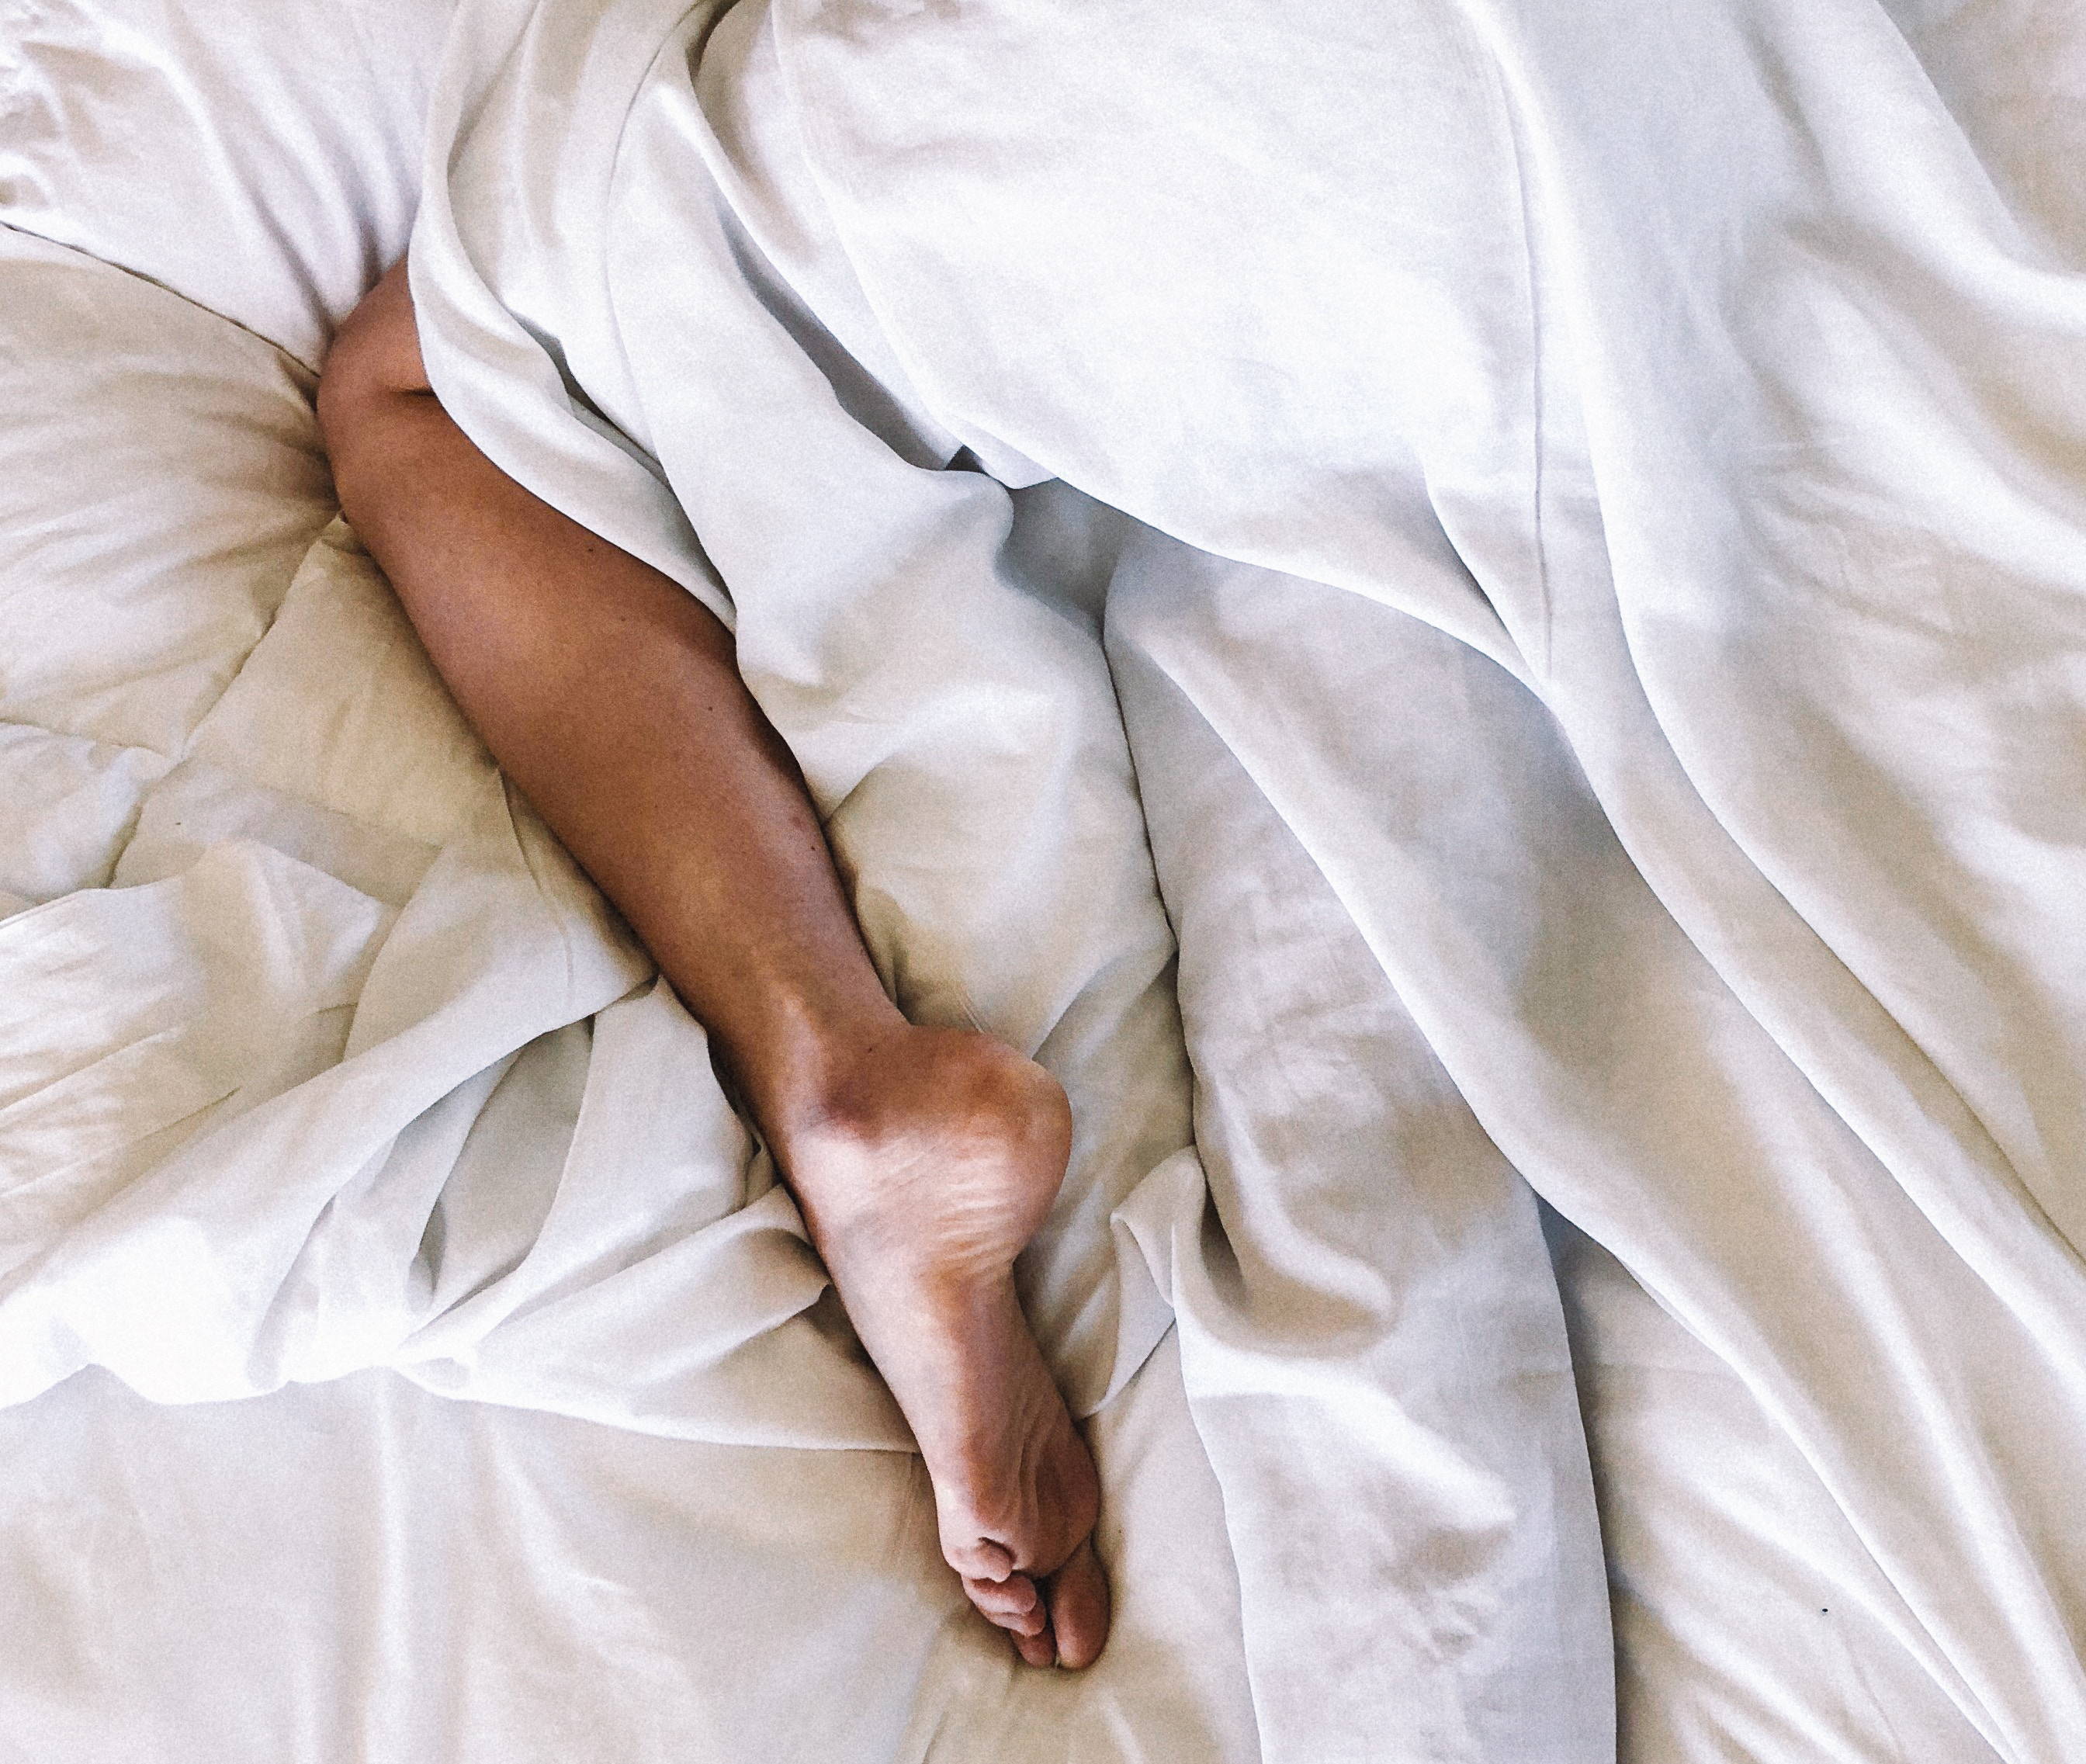 Is Sleeping Naked Better?